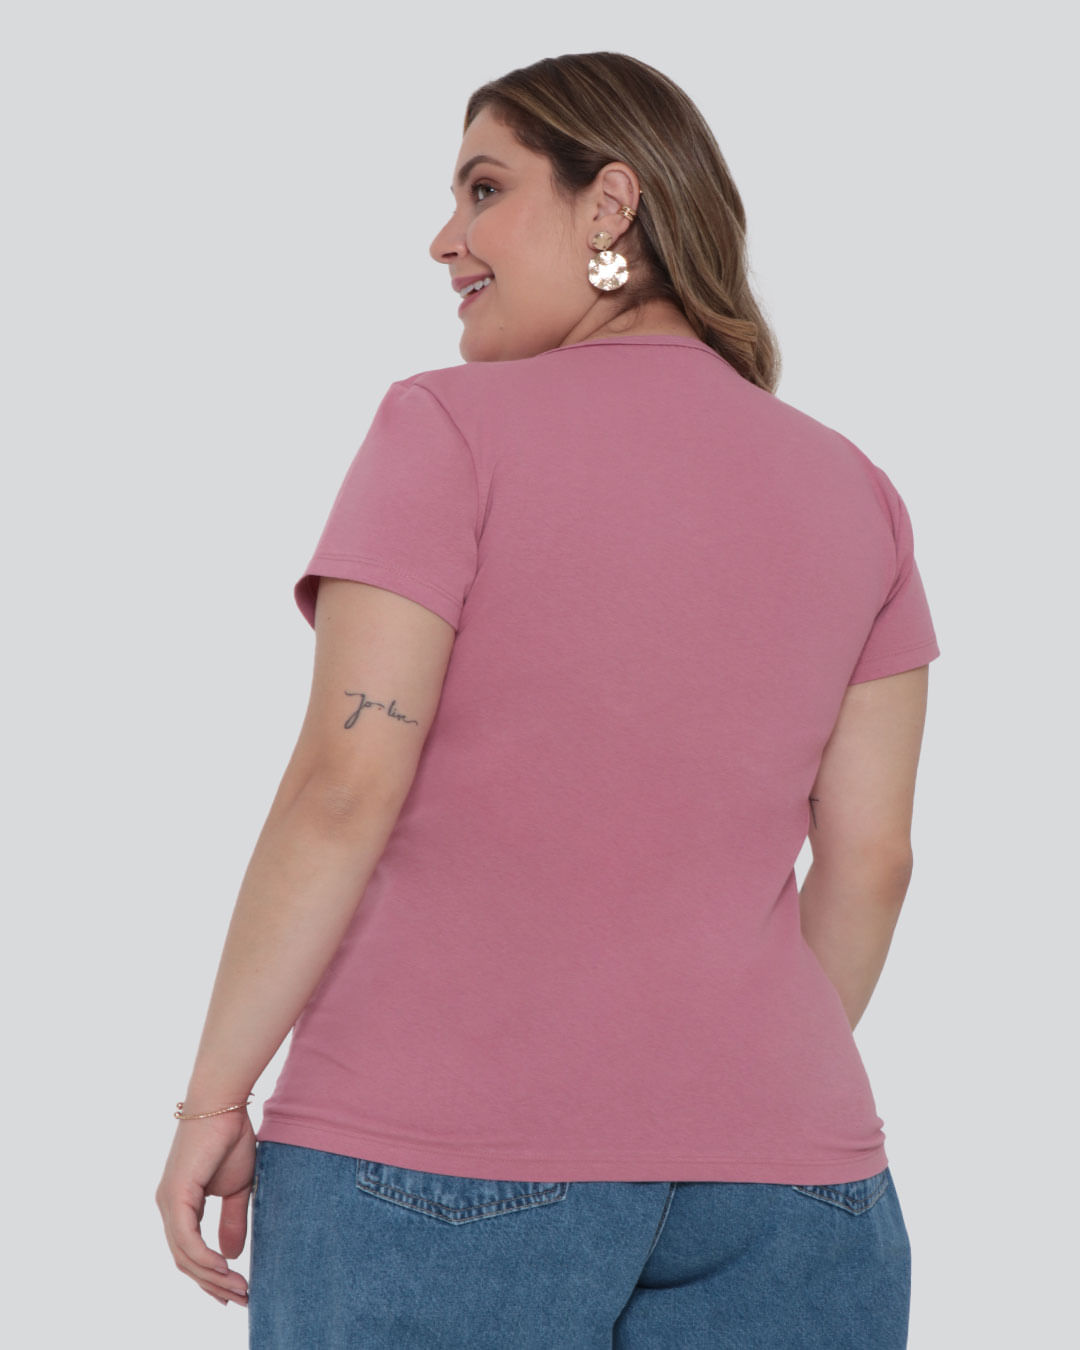 Blusa Feminina Plus Size 3/4 Rosa em Oferta na Lojas Torra